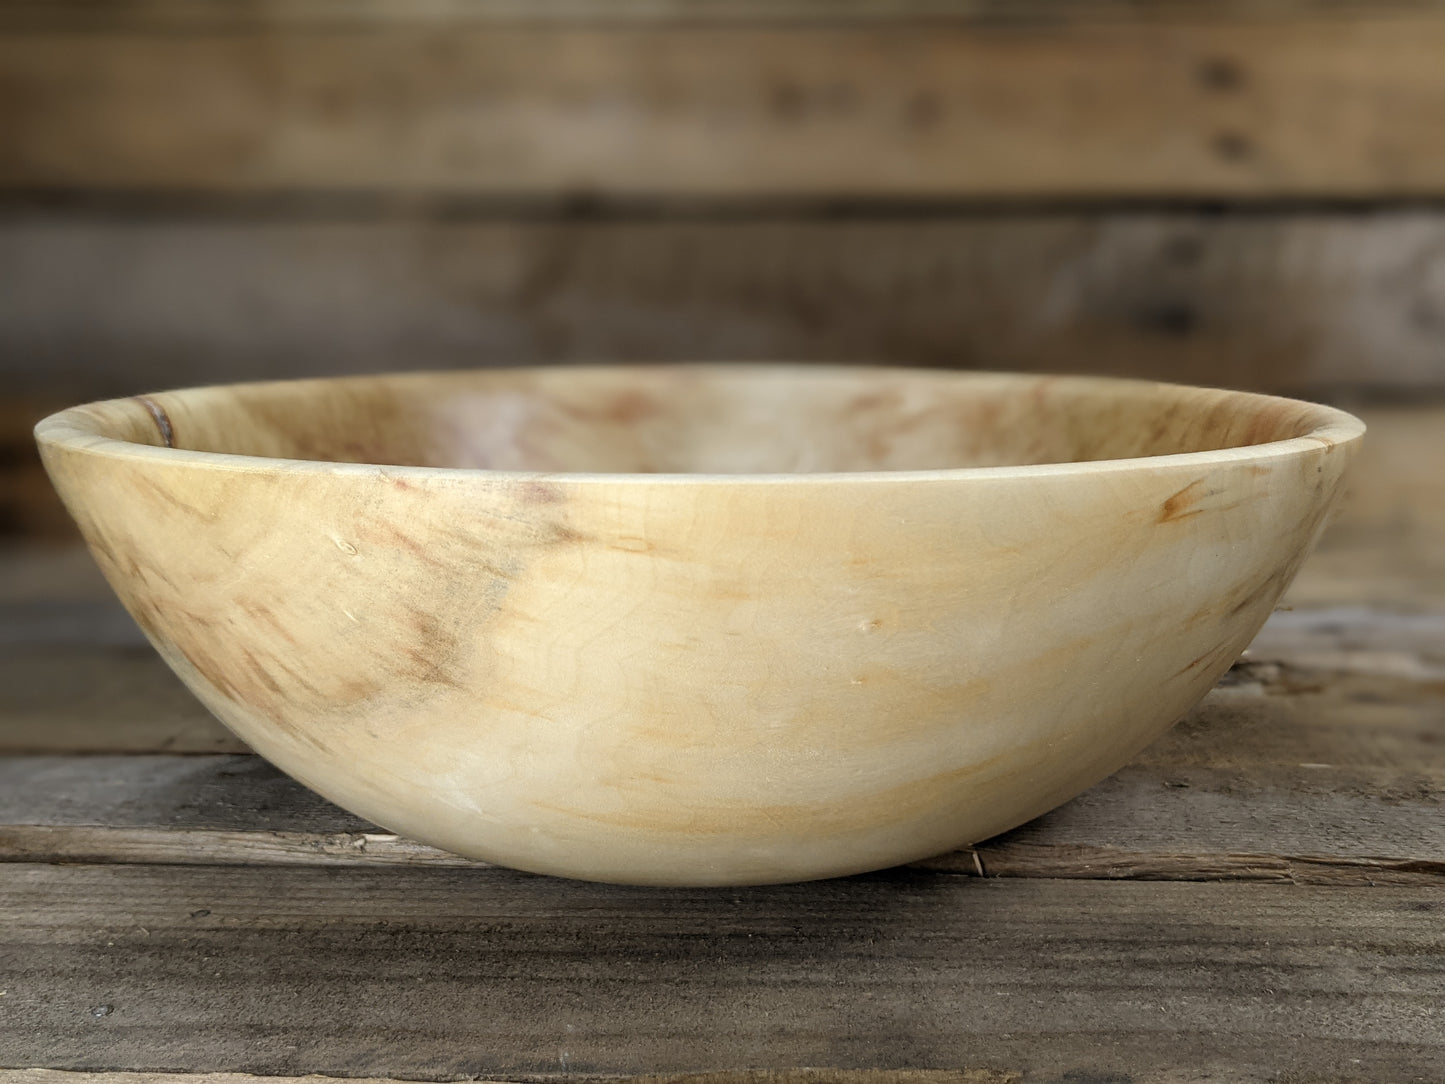 Box elder crotchwood bowl